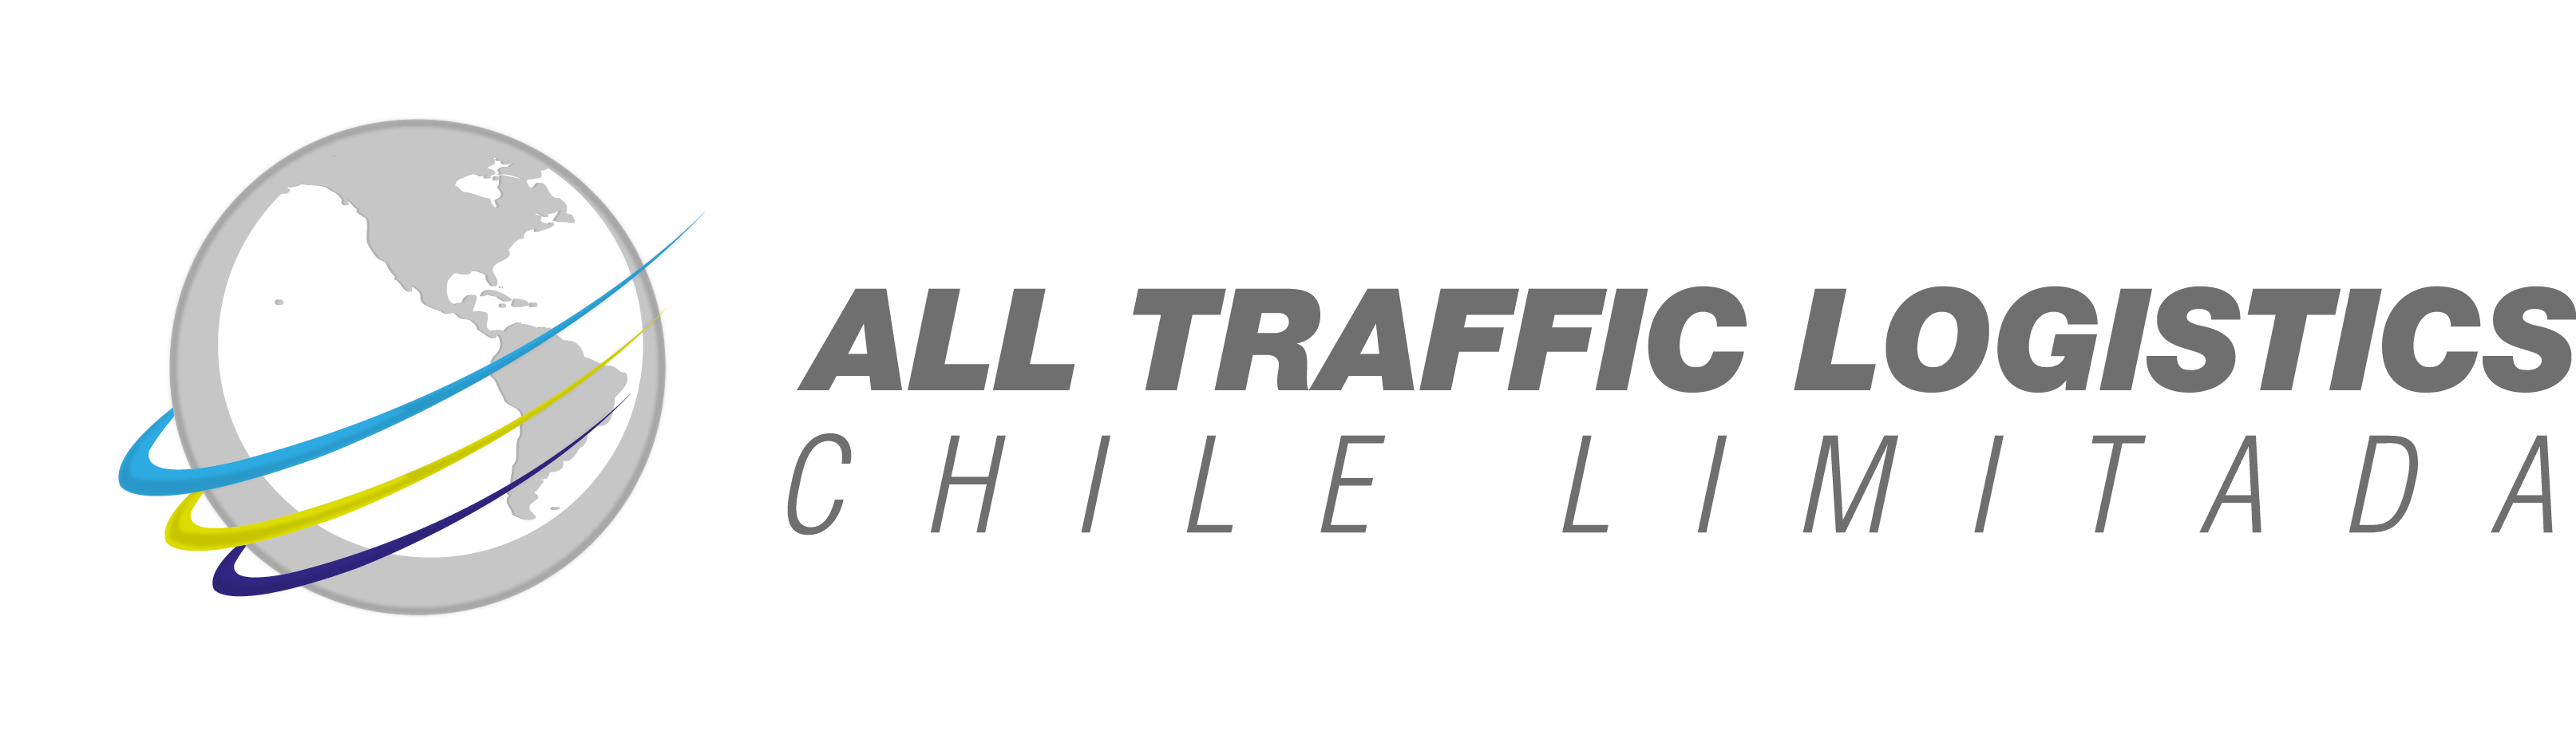 All Traffic Logistics Chile Ltda.